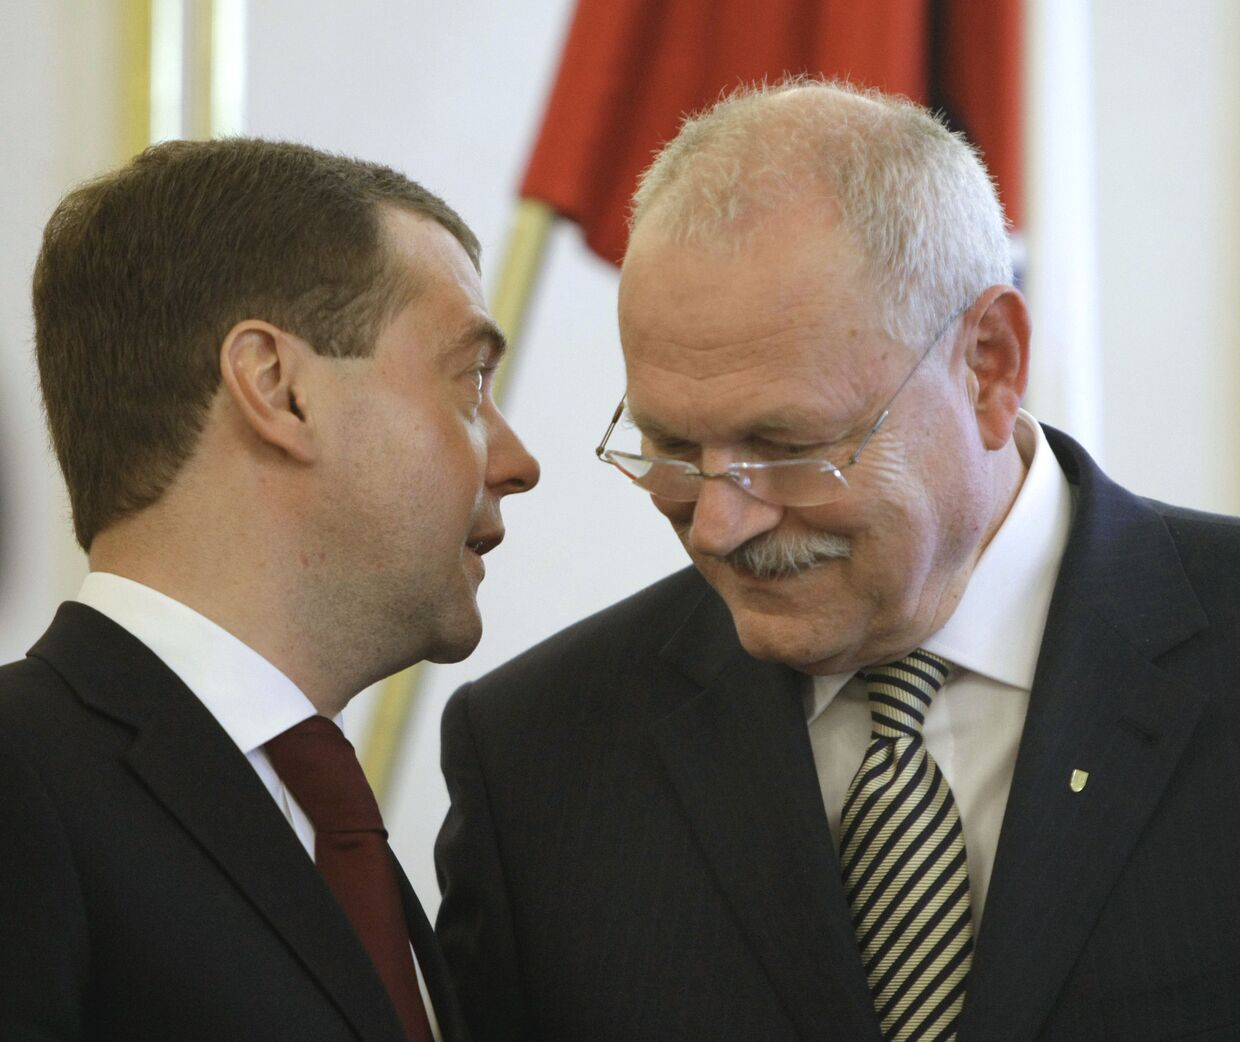 Президент РФ Д.Медведев и президент Словакии И.Гашпарович